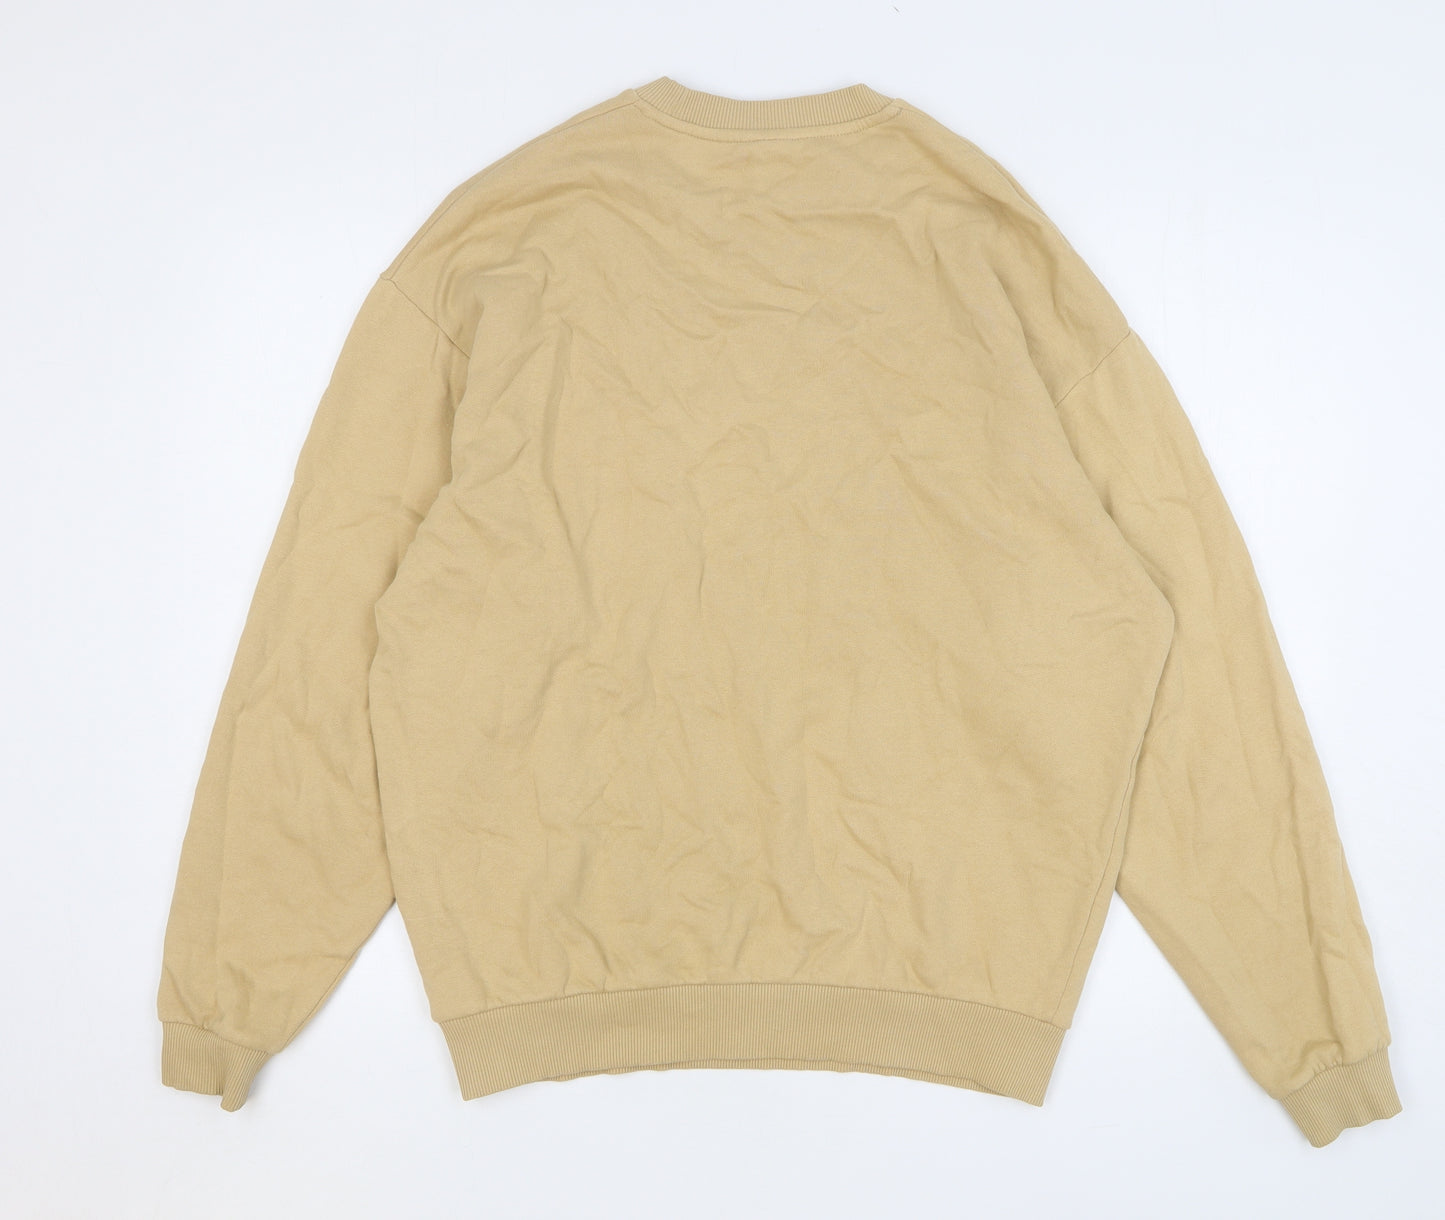 ASOS Mens Beige Cotton Pullover Sweatshirt Size S